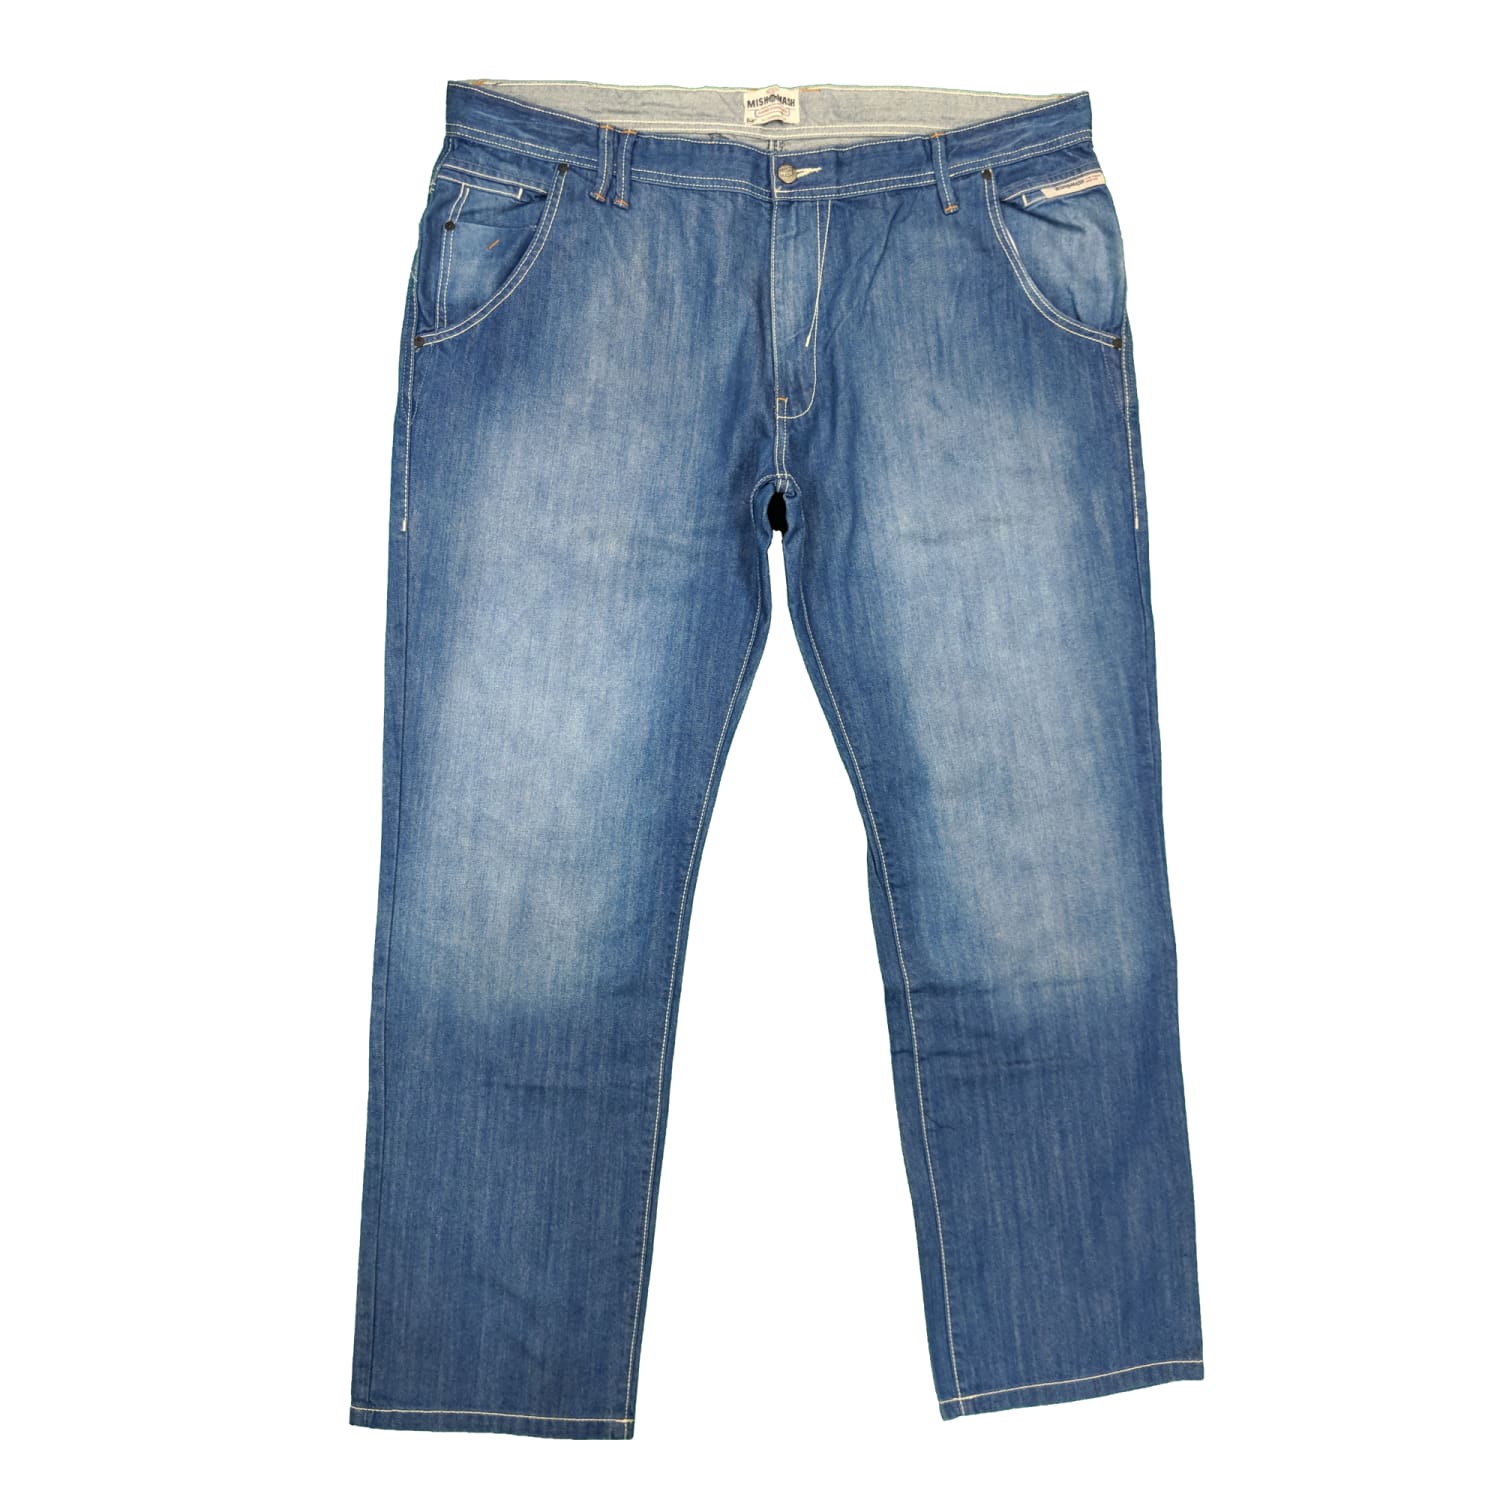 Mish Mash Jeans - 11978 - 1988 Blue Avalon 1